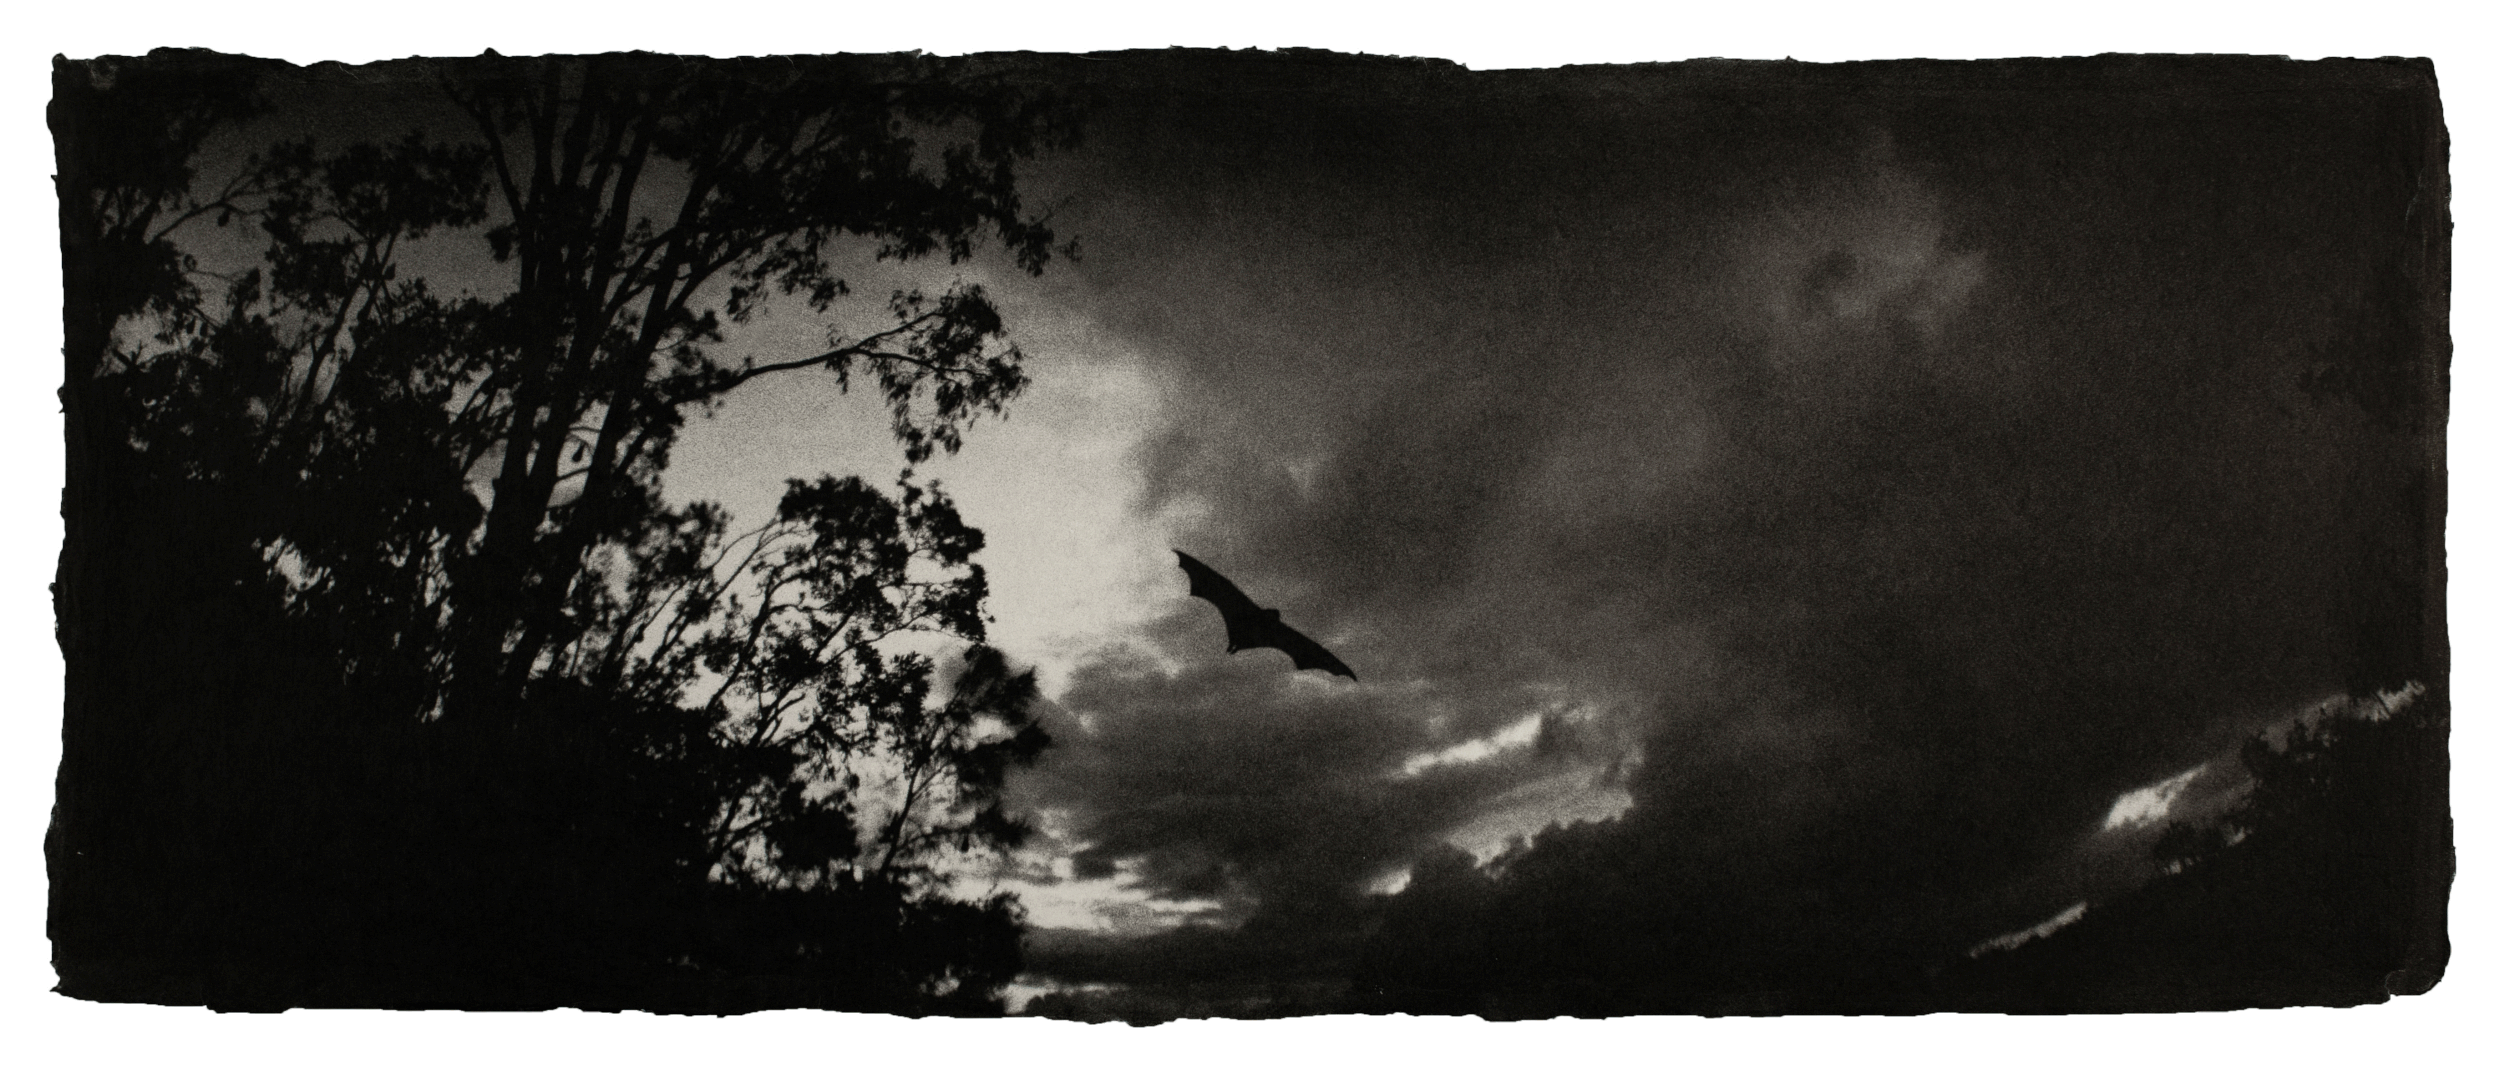  Flying fox, Australia 